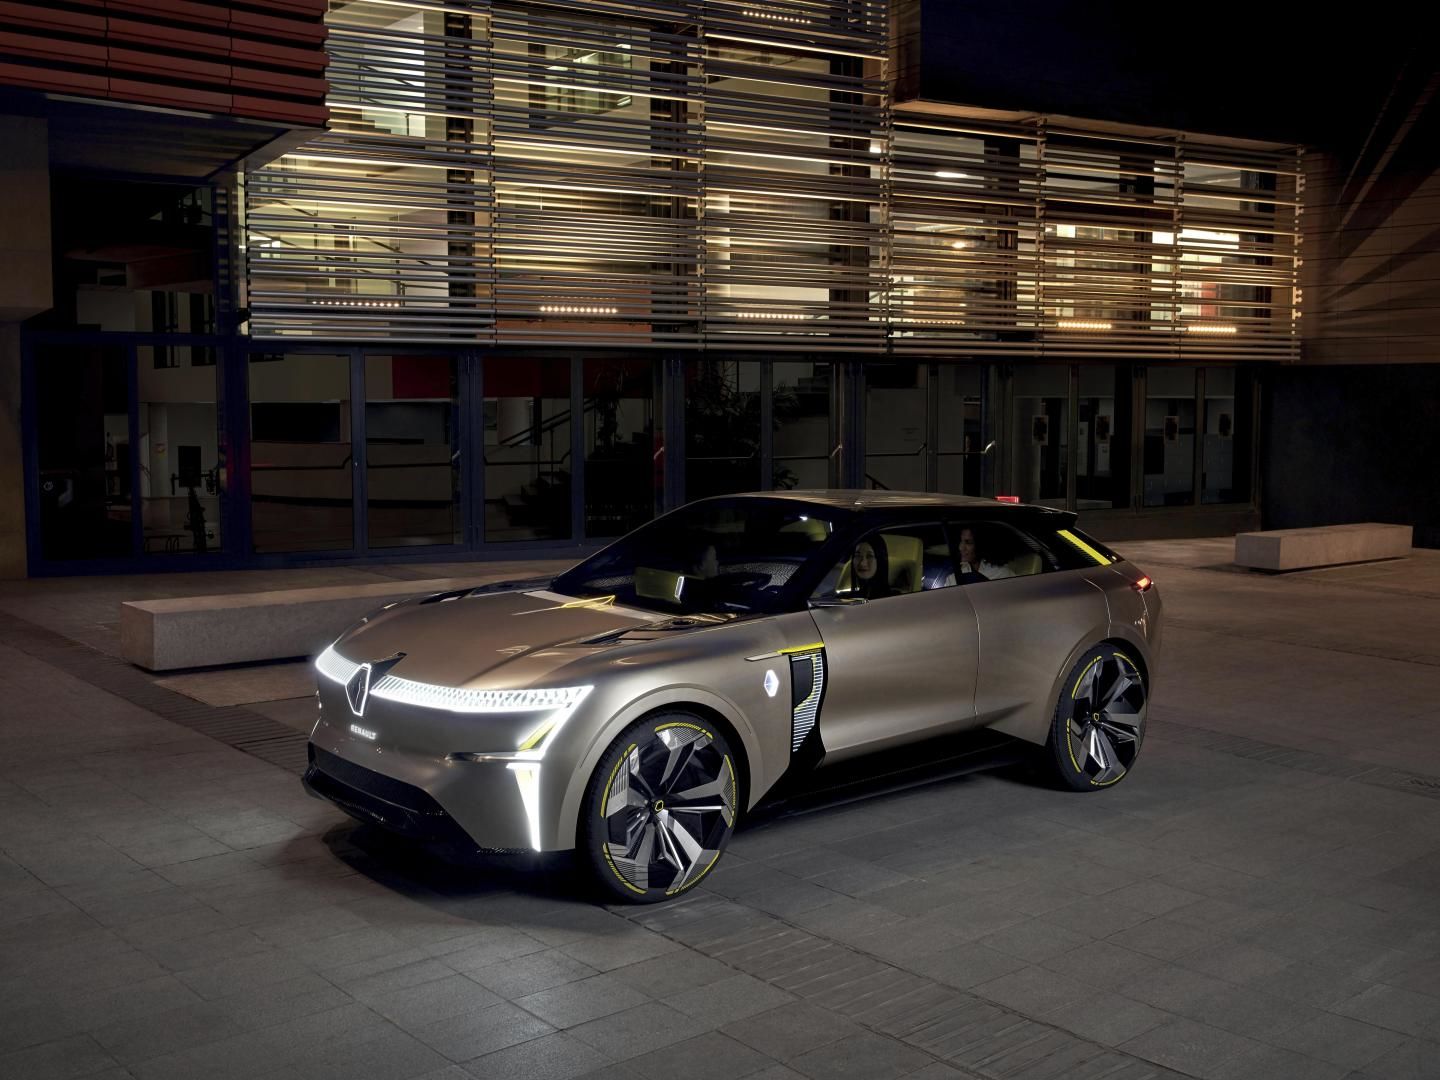 Renault Morphoz concept electric crossover